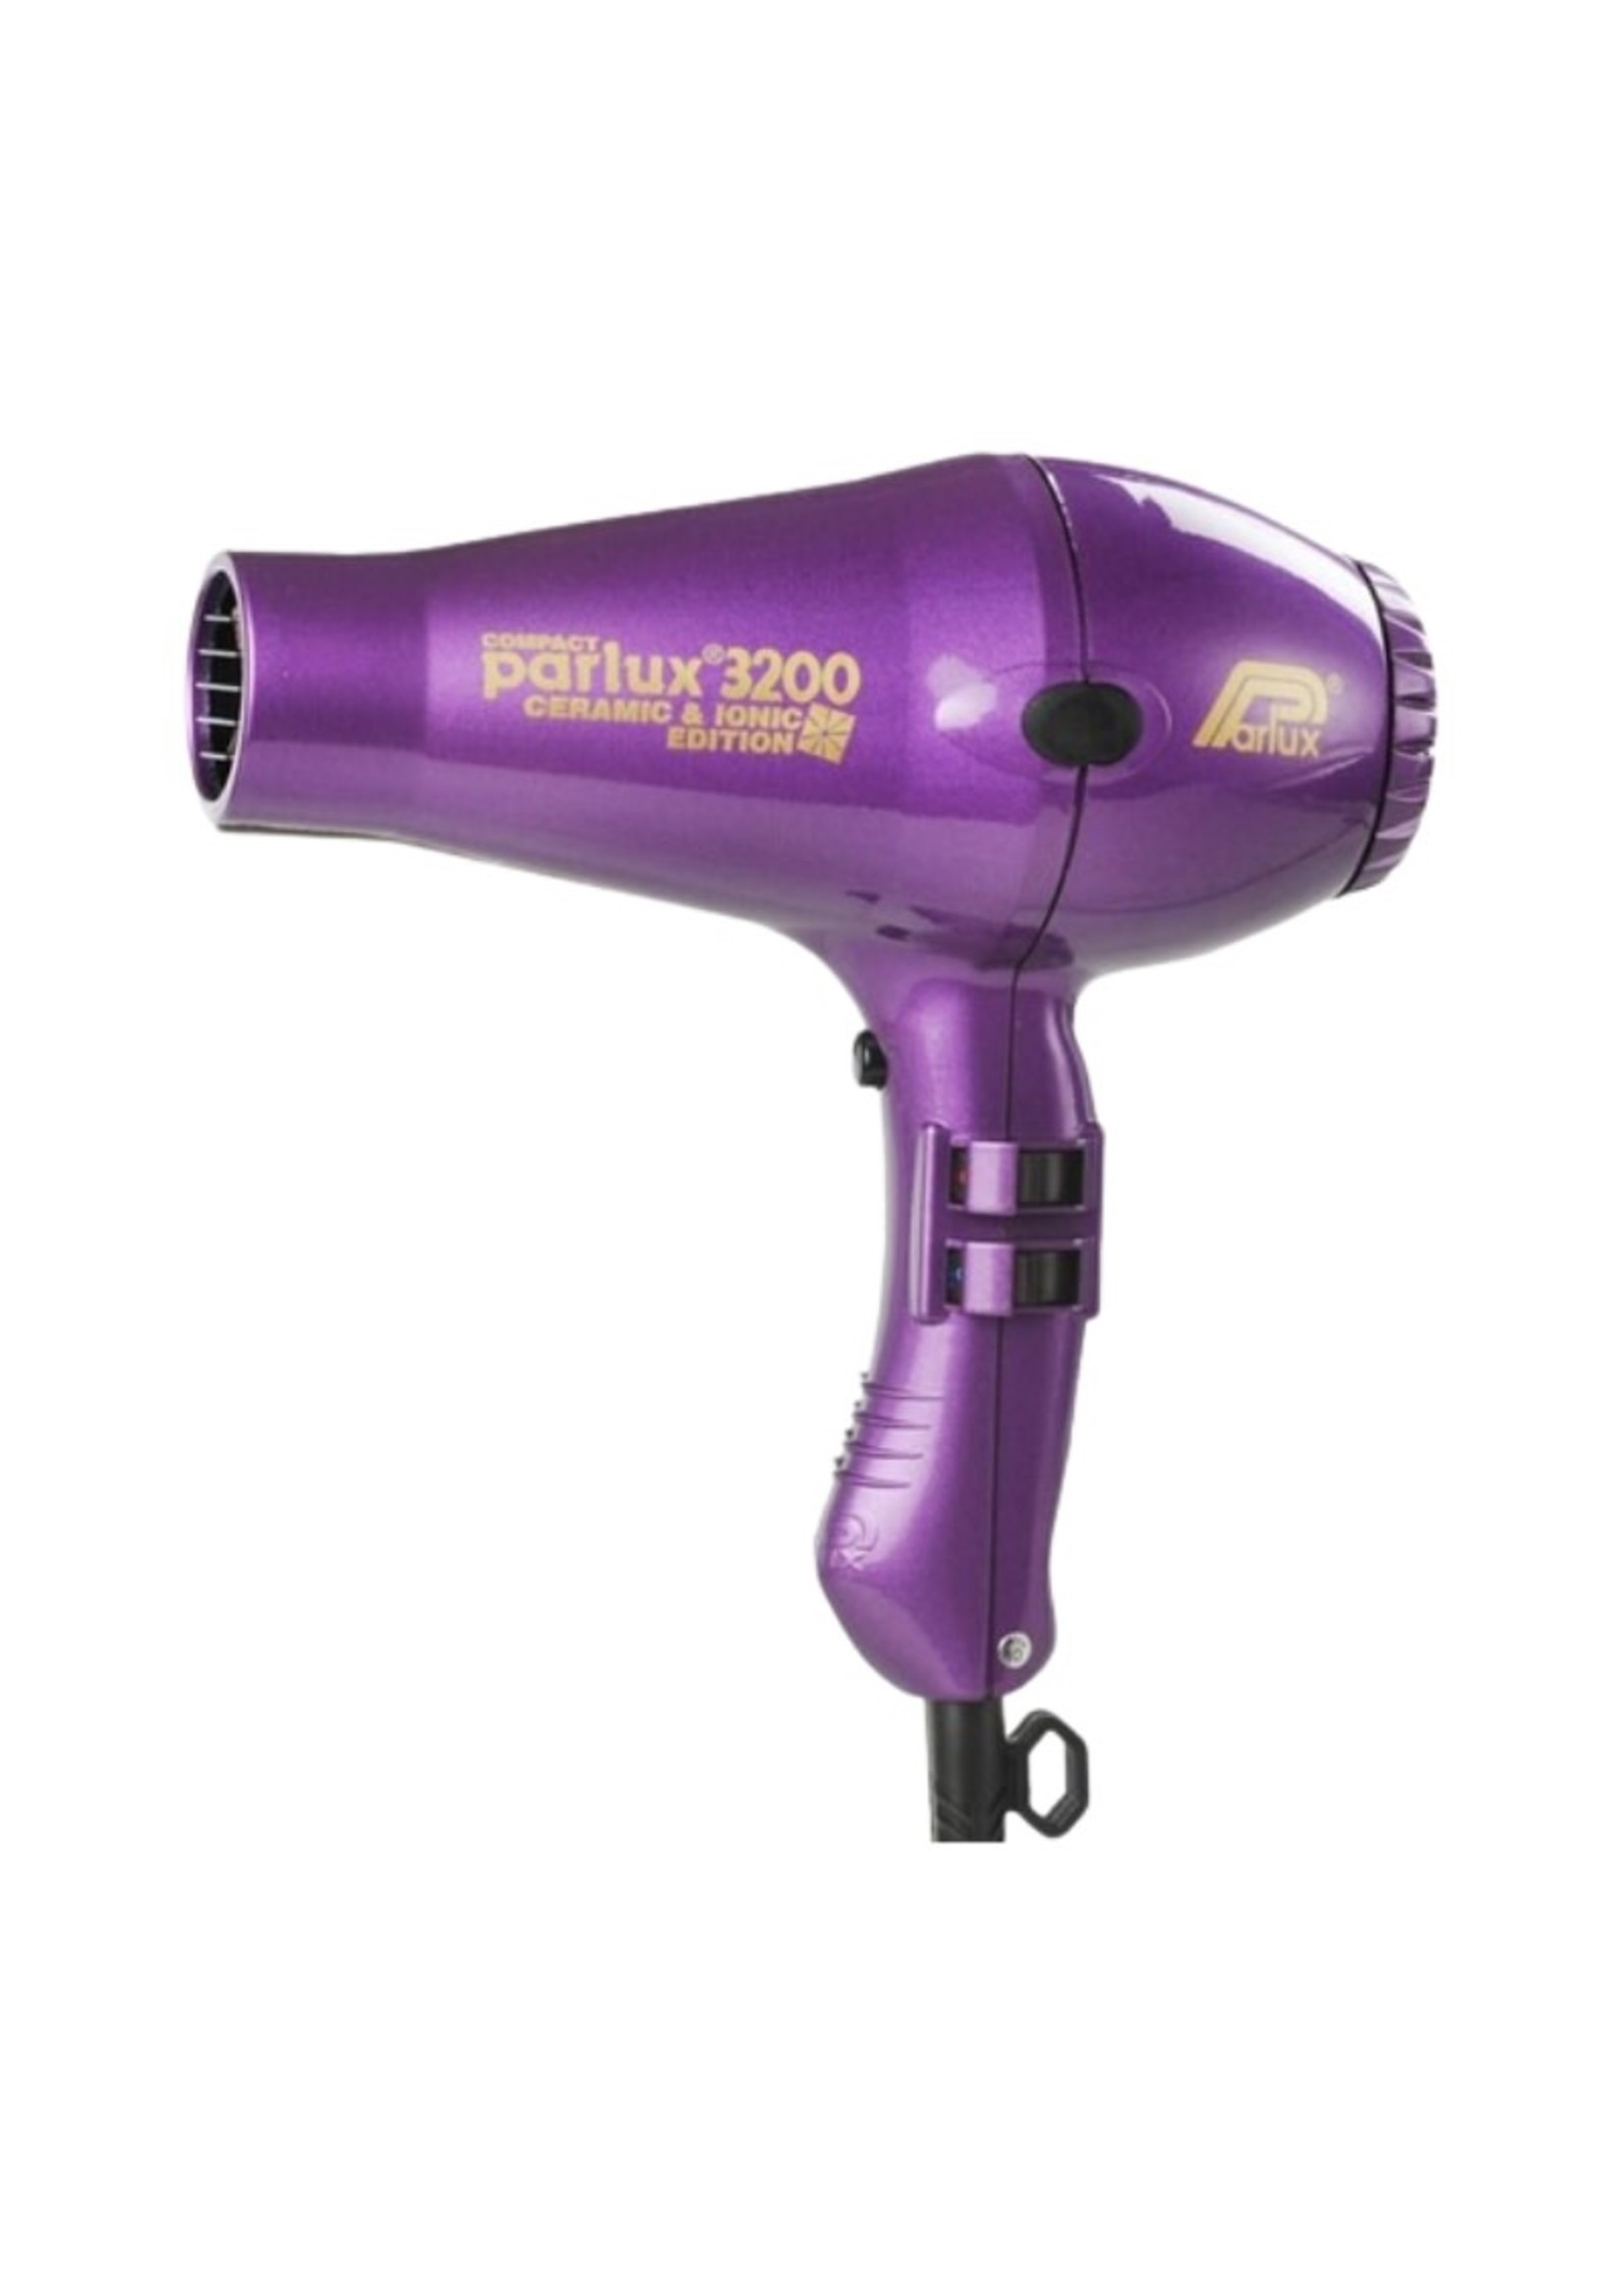 Parlux Parlux 3200 Ceramic & Ionic Hair Dryer 1900W - Purple